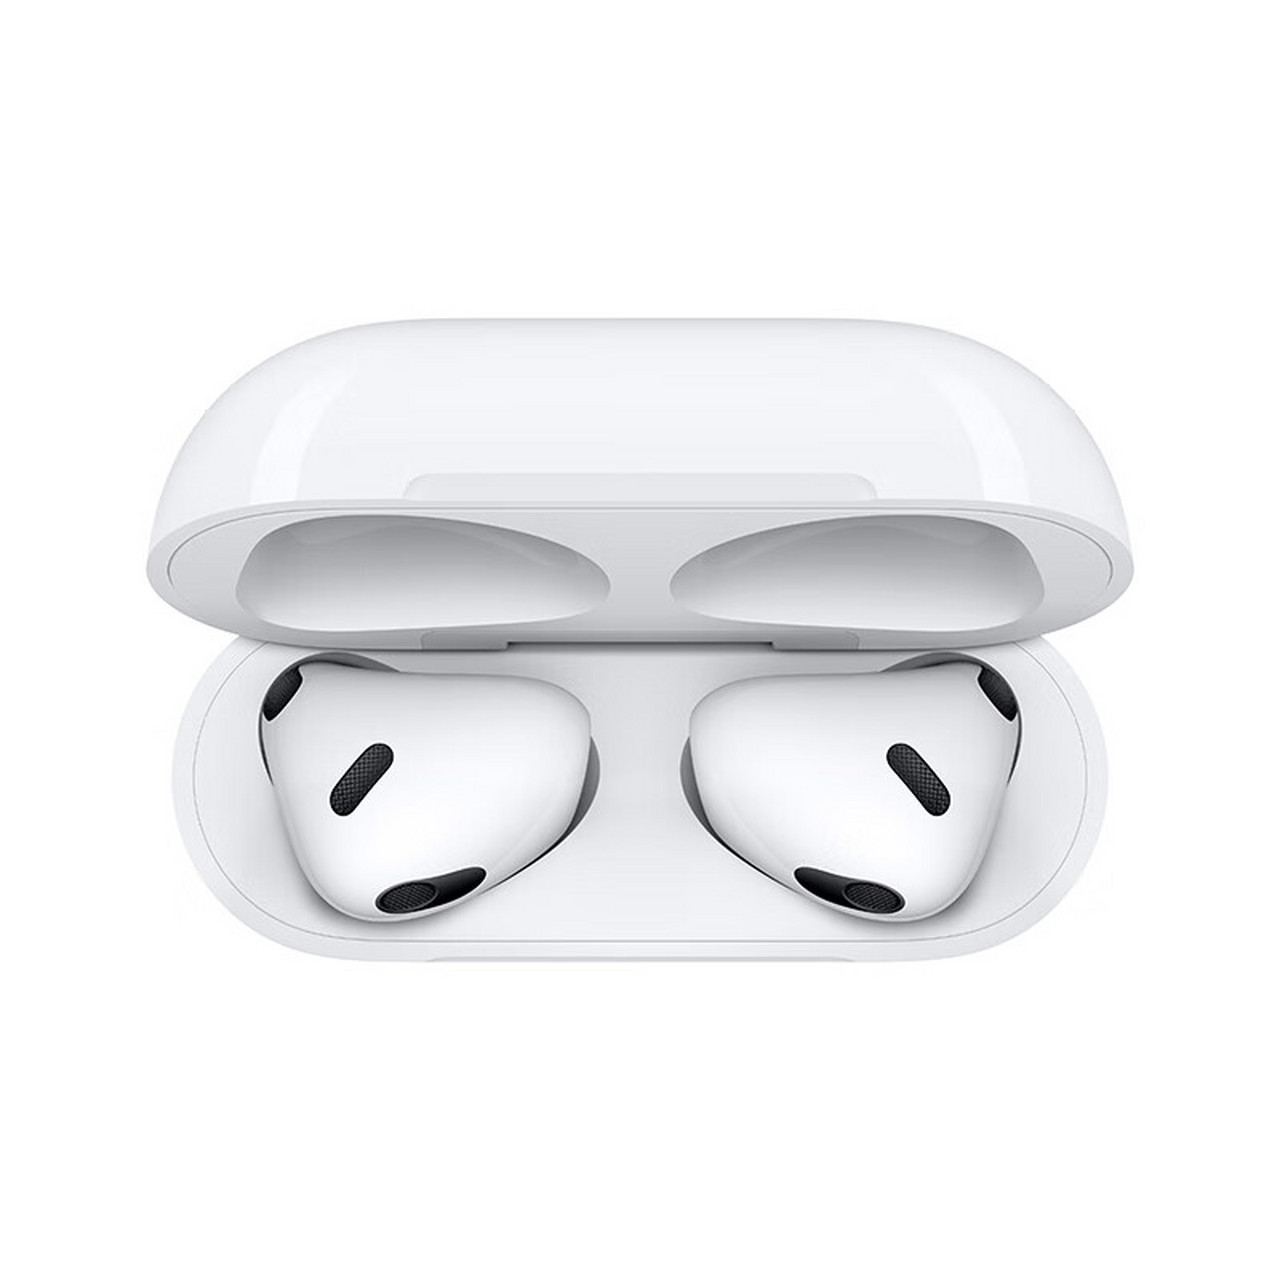 airpods (第三代) 配闪电充电盒,这是一款出自苹果之手的无线蓝牙耳机